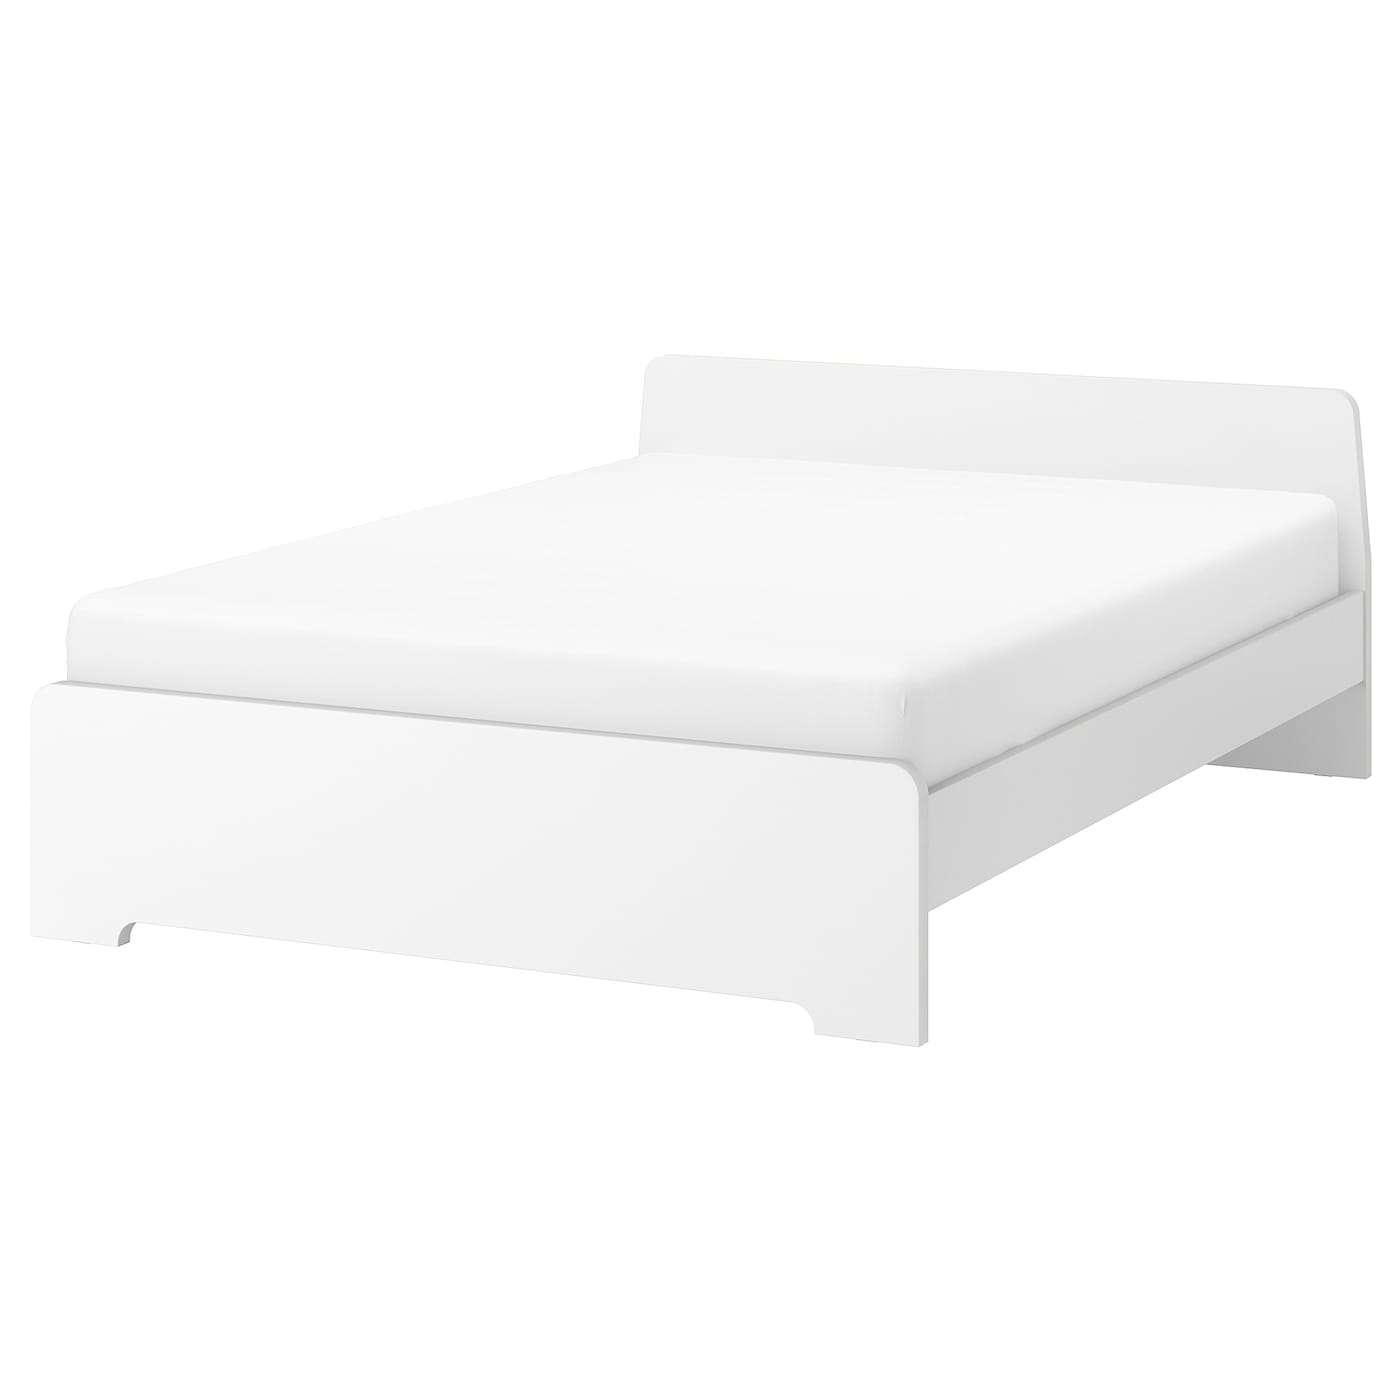 Каркас кровати - IKEA ASKVOLL, 200х160 см, белый, АСКВОЛЛЬ ИКЕА